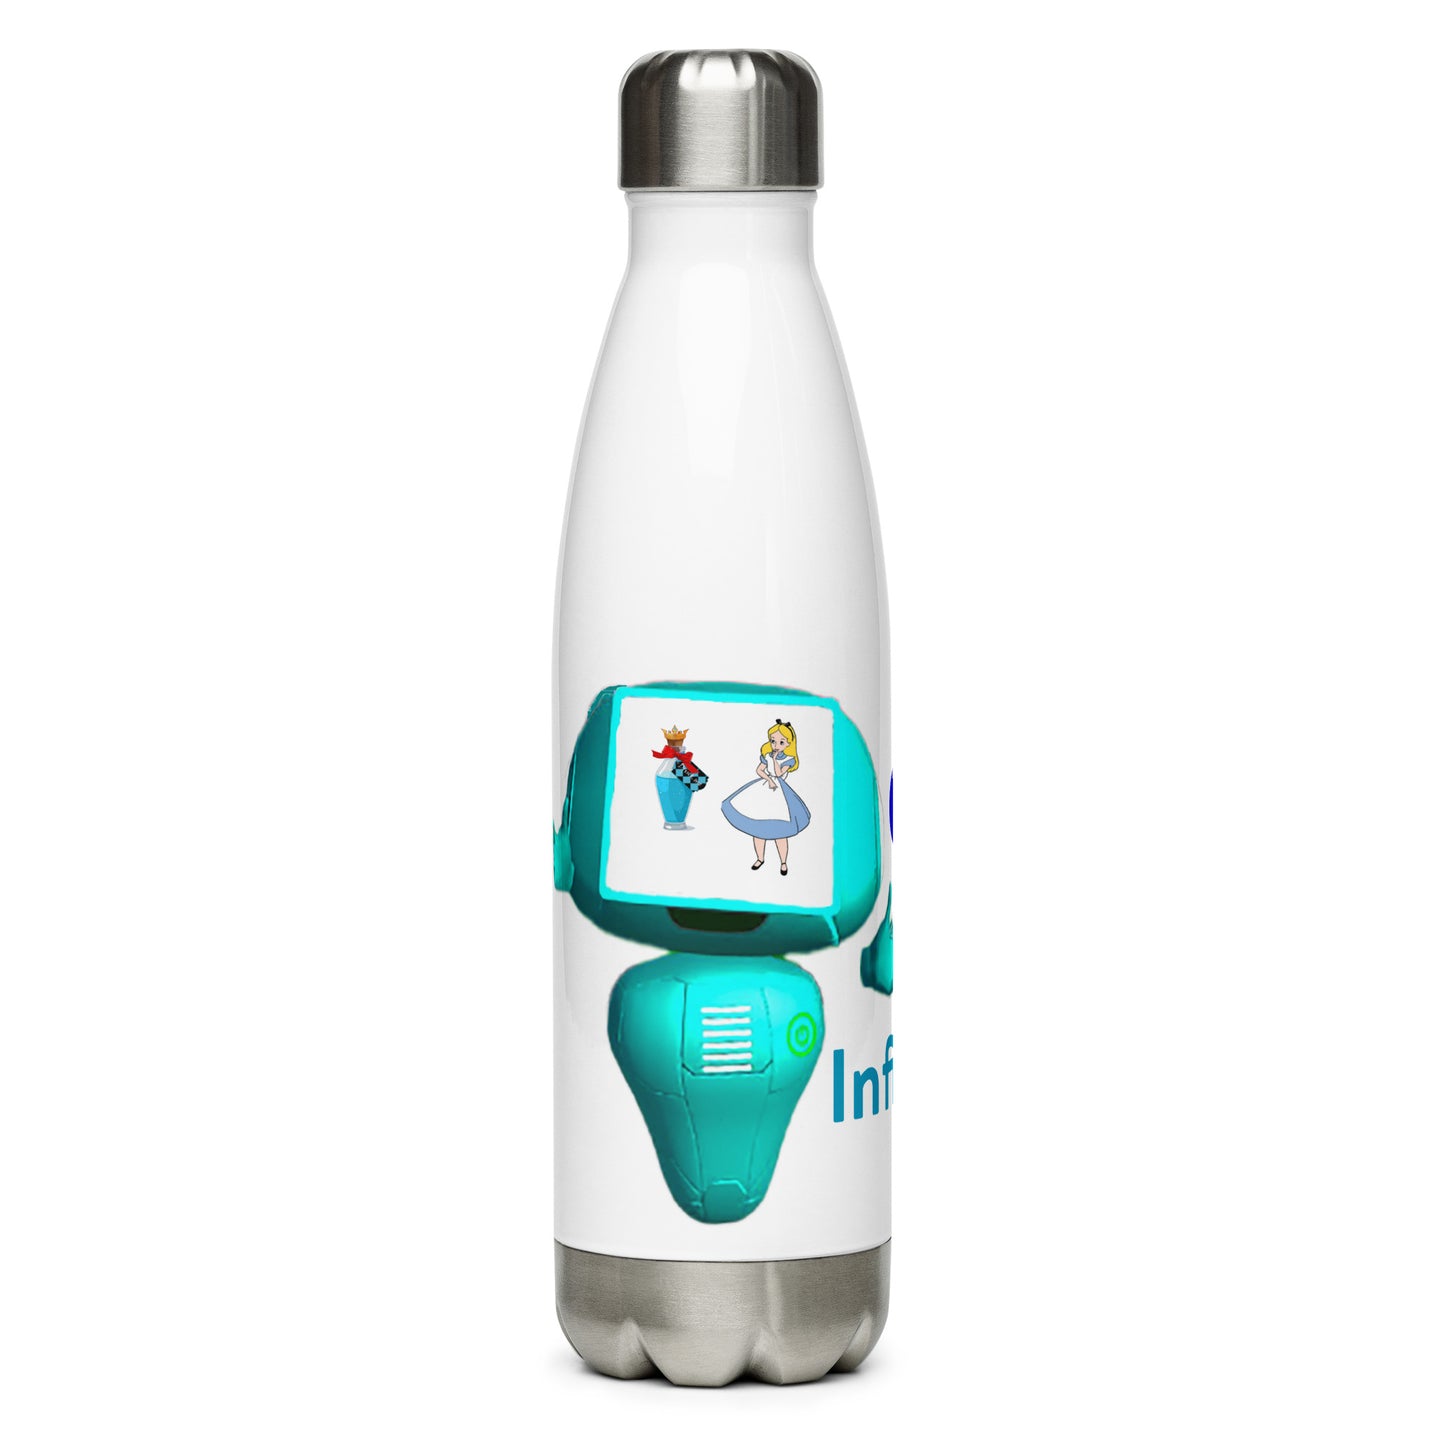 "Drink Me" Infiniverse Wonderland Water Bottle